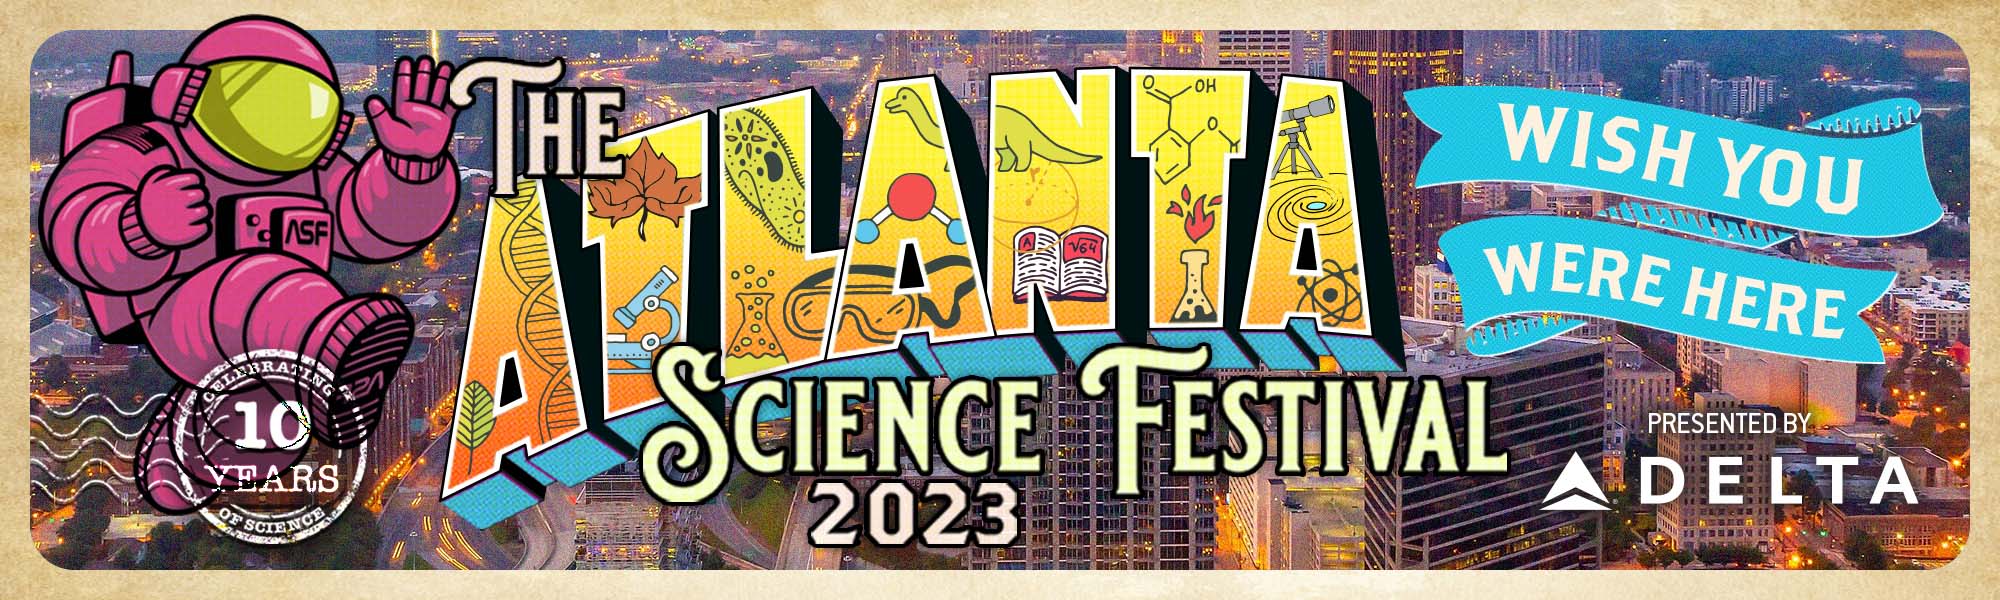 The Atlanta Science Festival 2023, presented by Delta